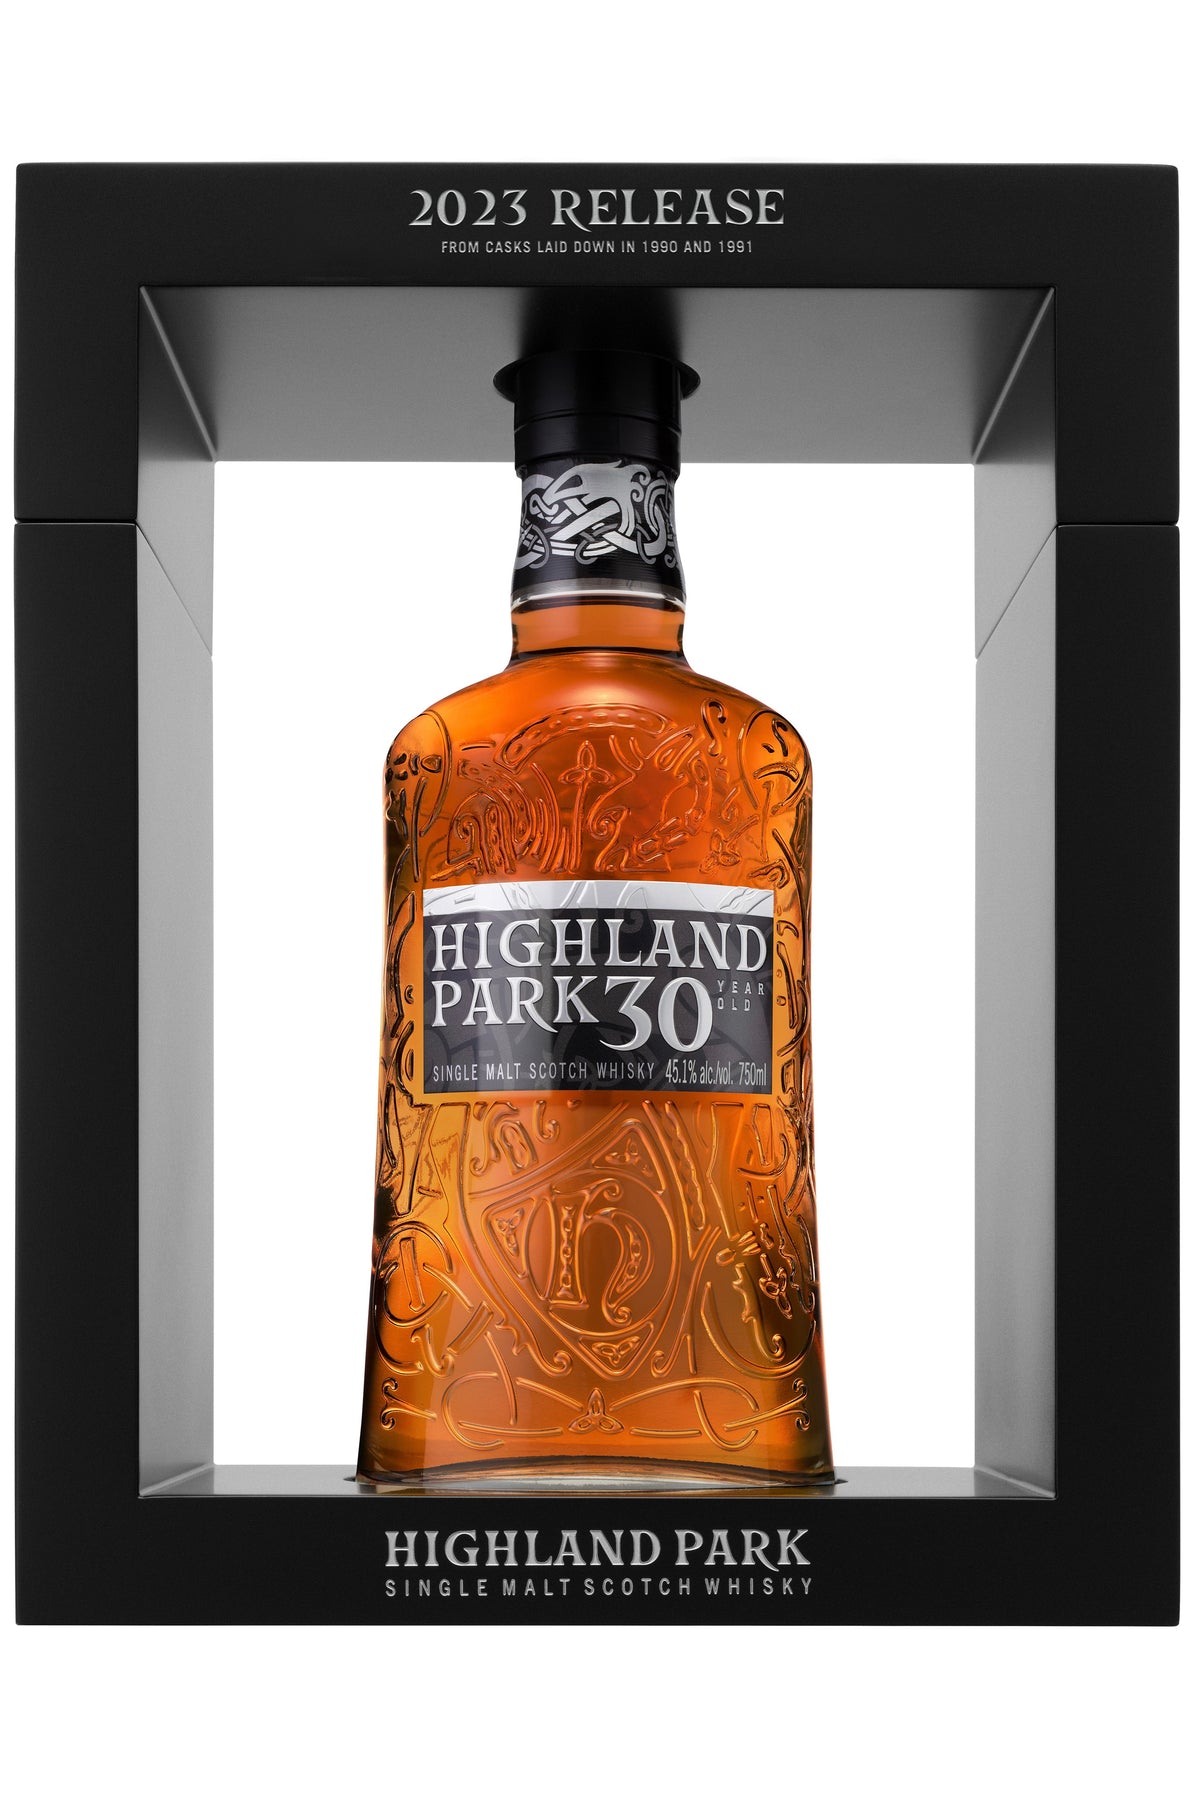 Highland Park 30 Year Old Scotch Whisky